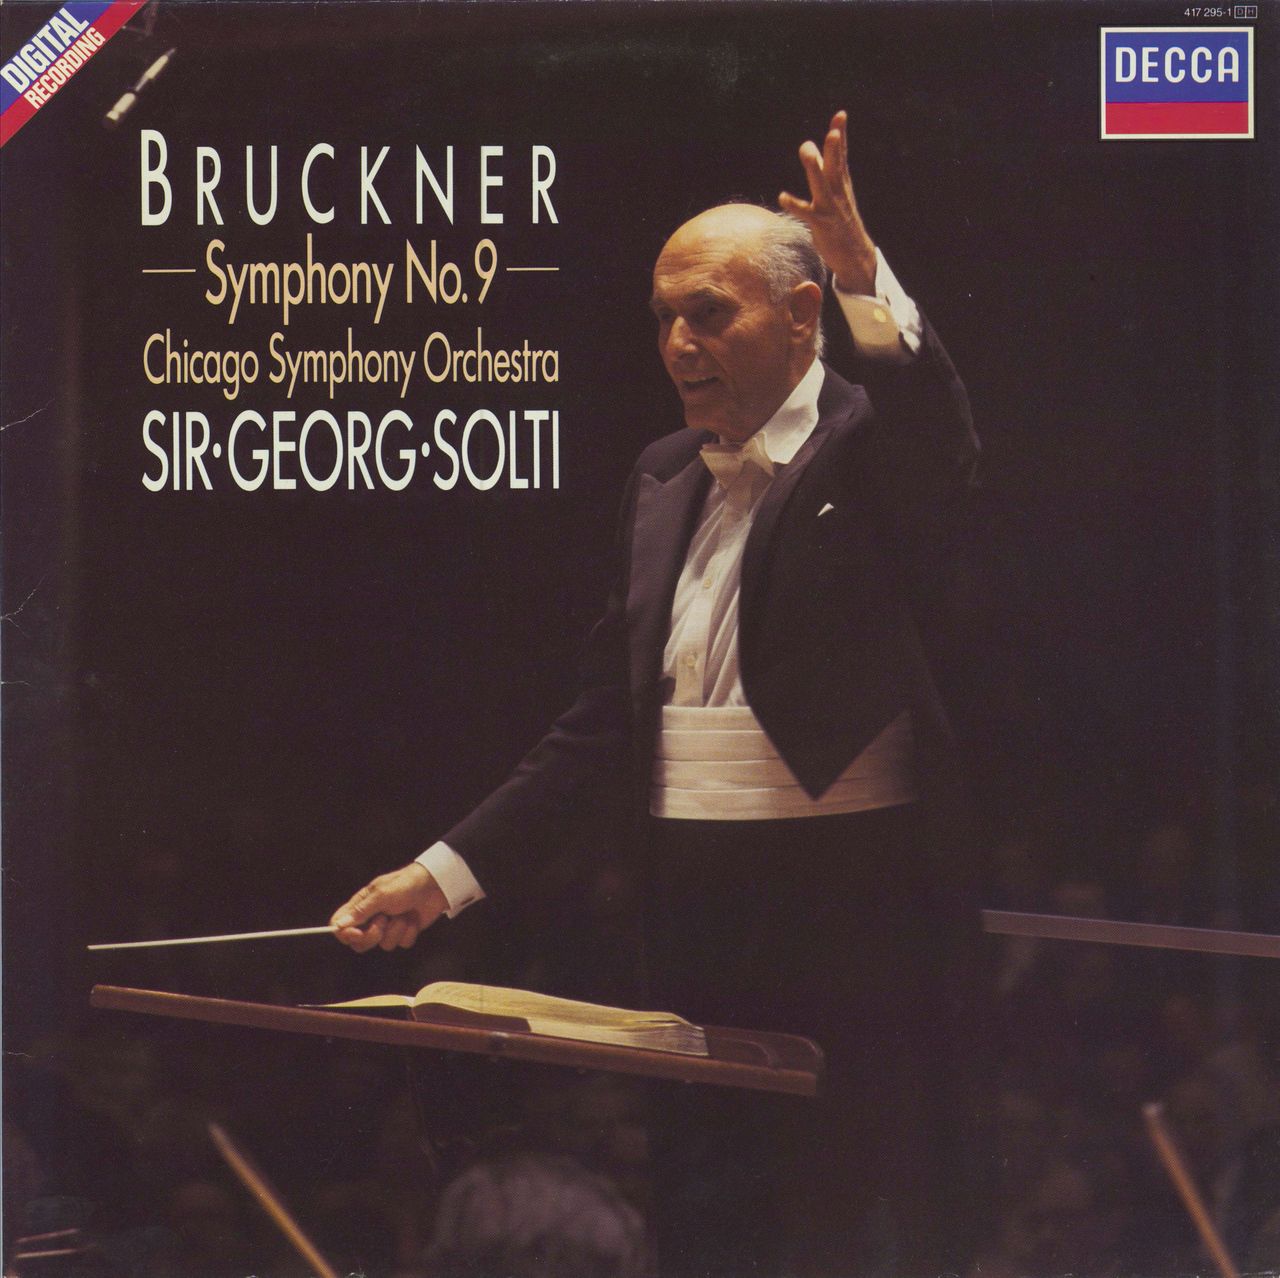 Anton Bruckner Symphony No. 9 Dutch vinyl LP album (LP record) 417295-1